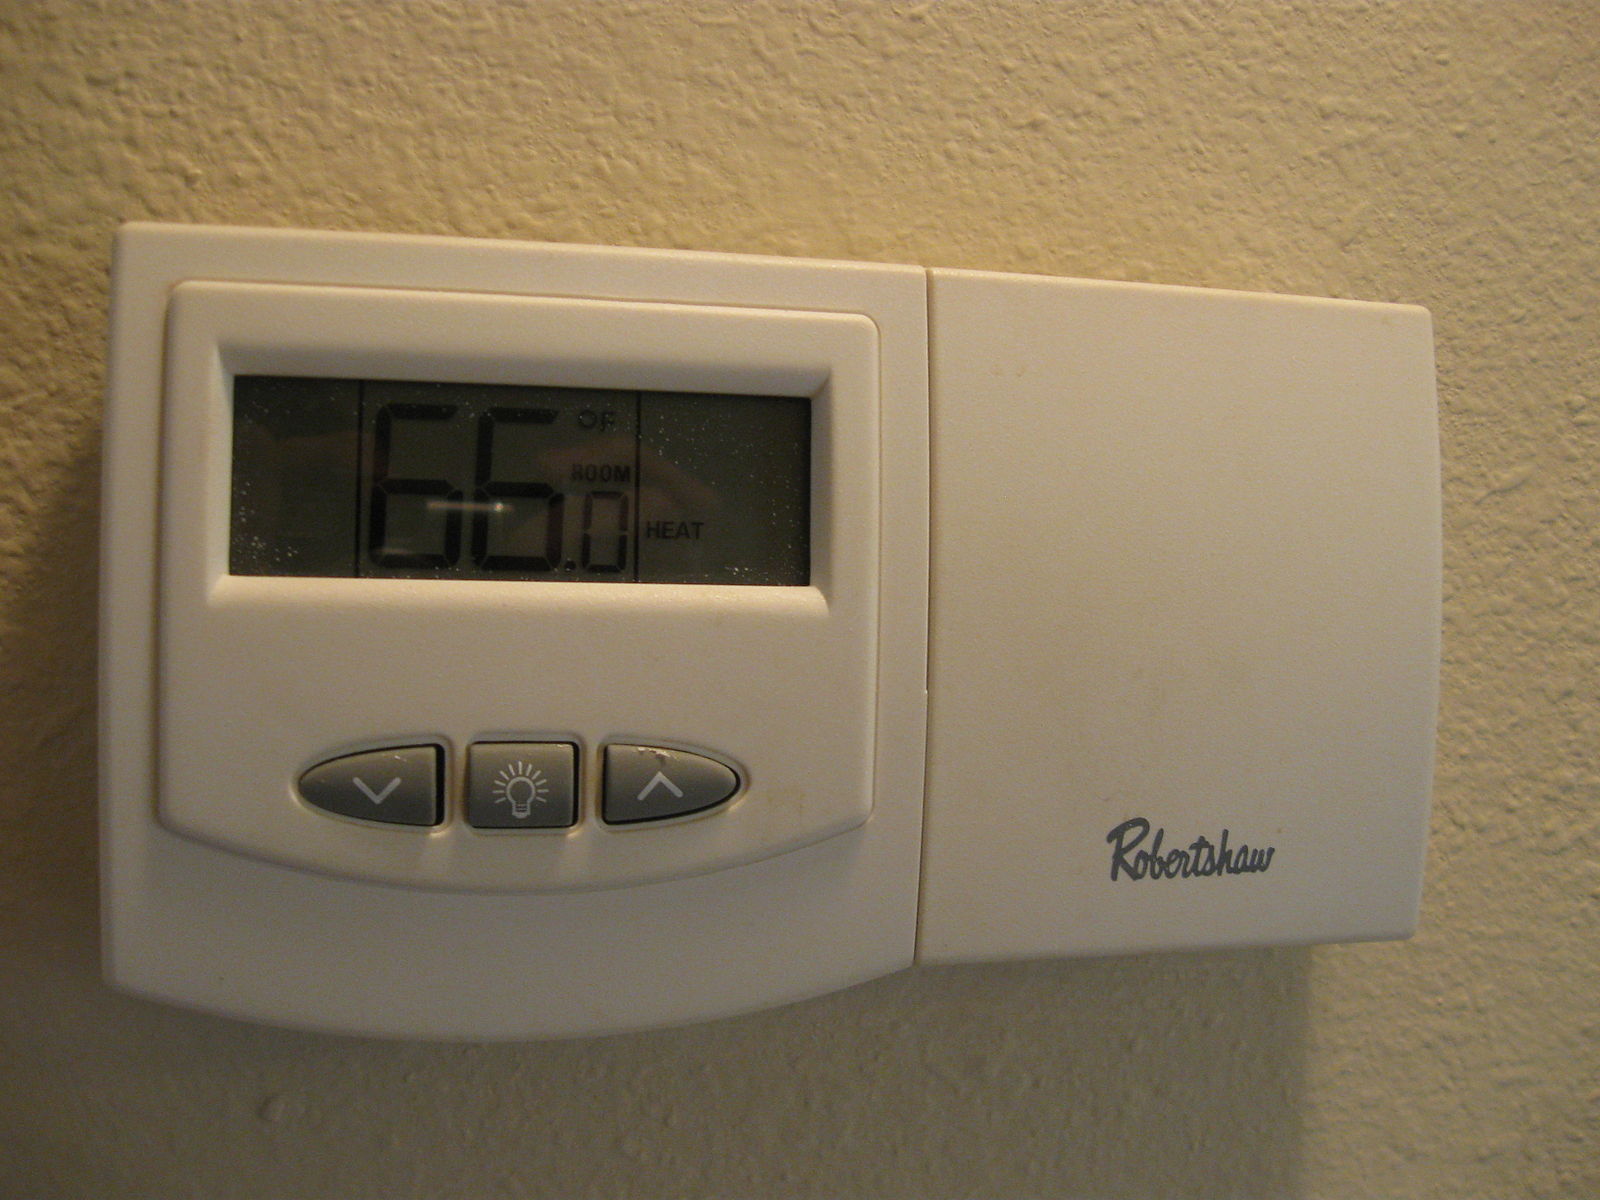 thermostat and hygrostat